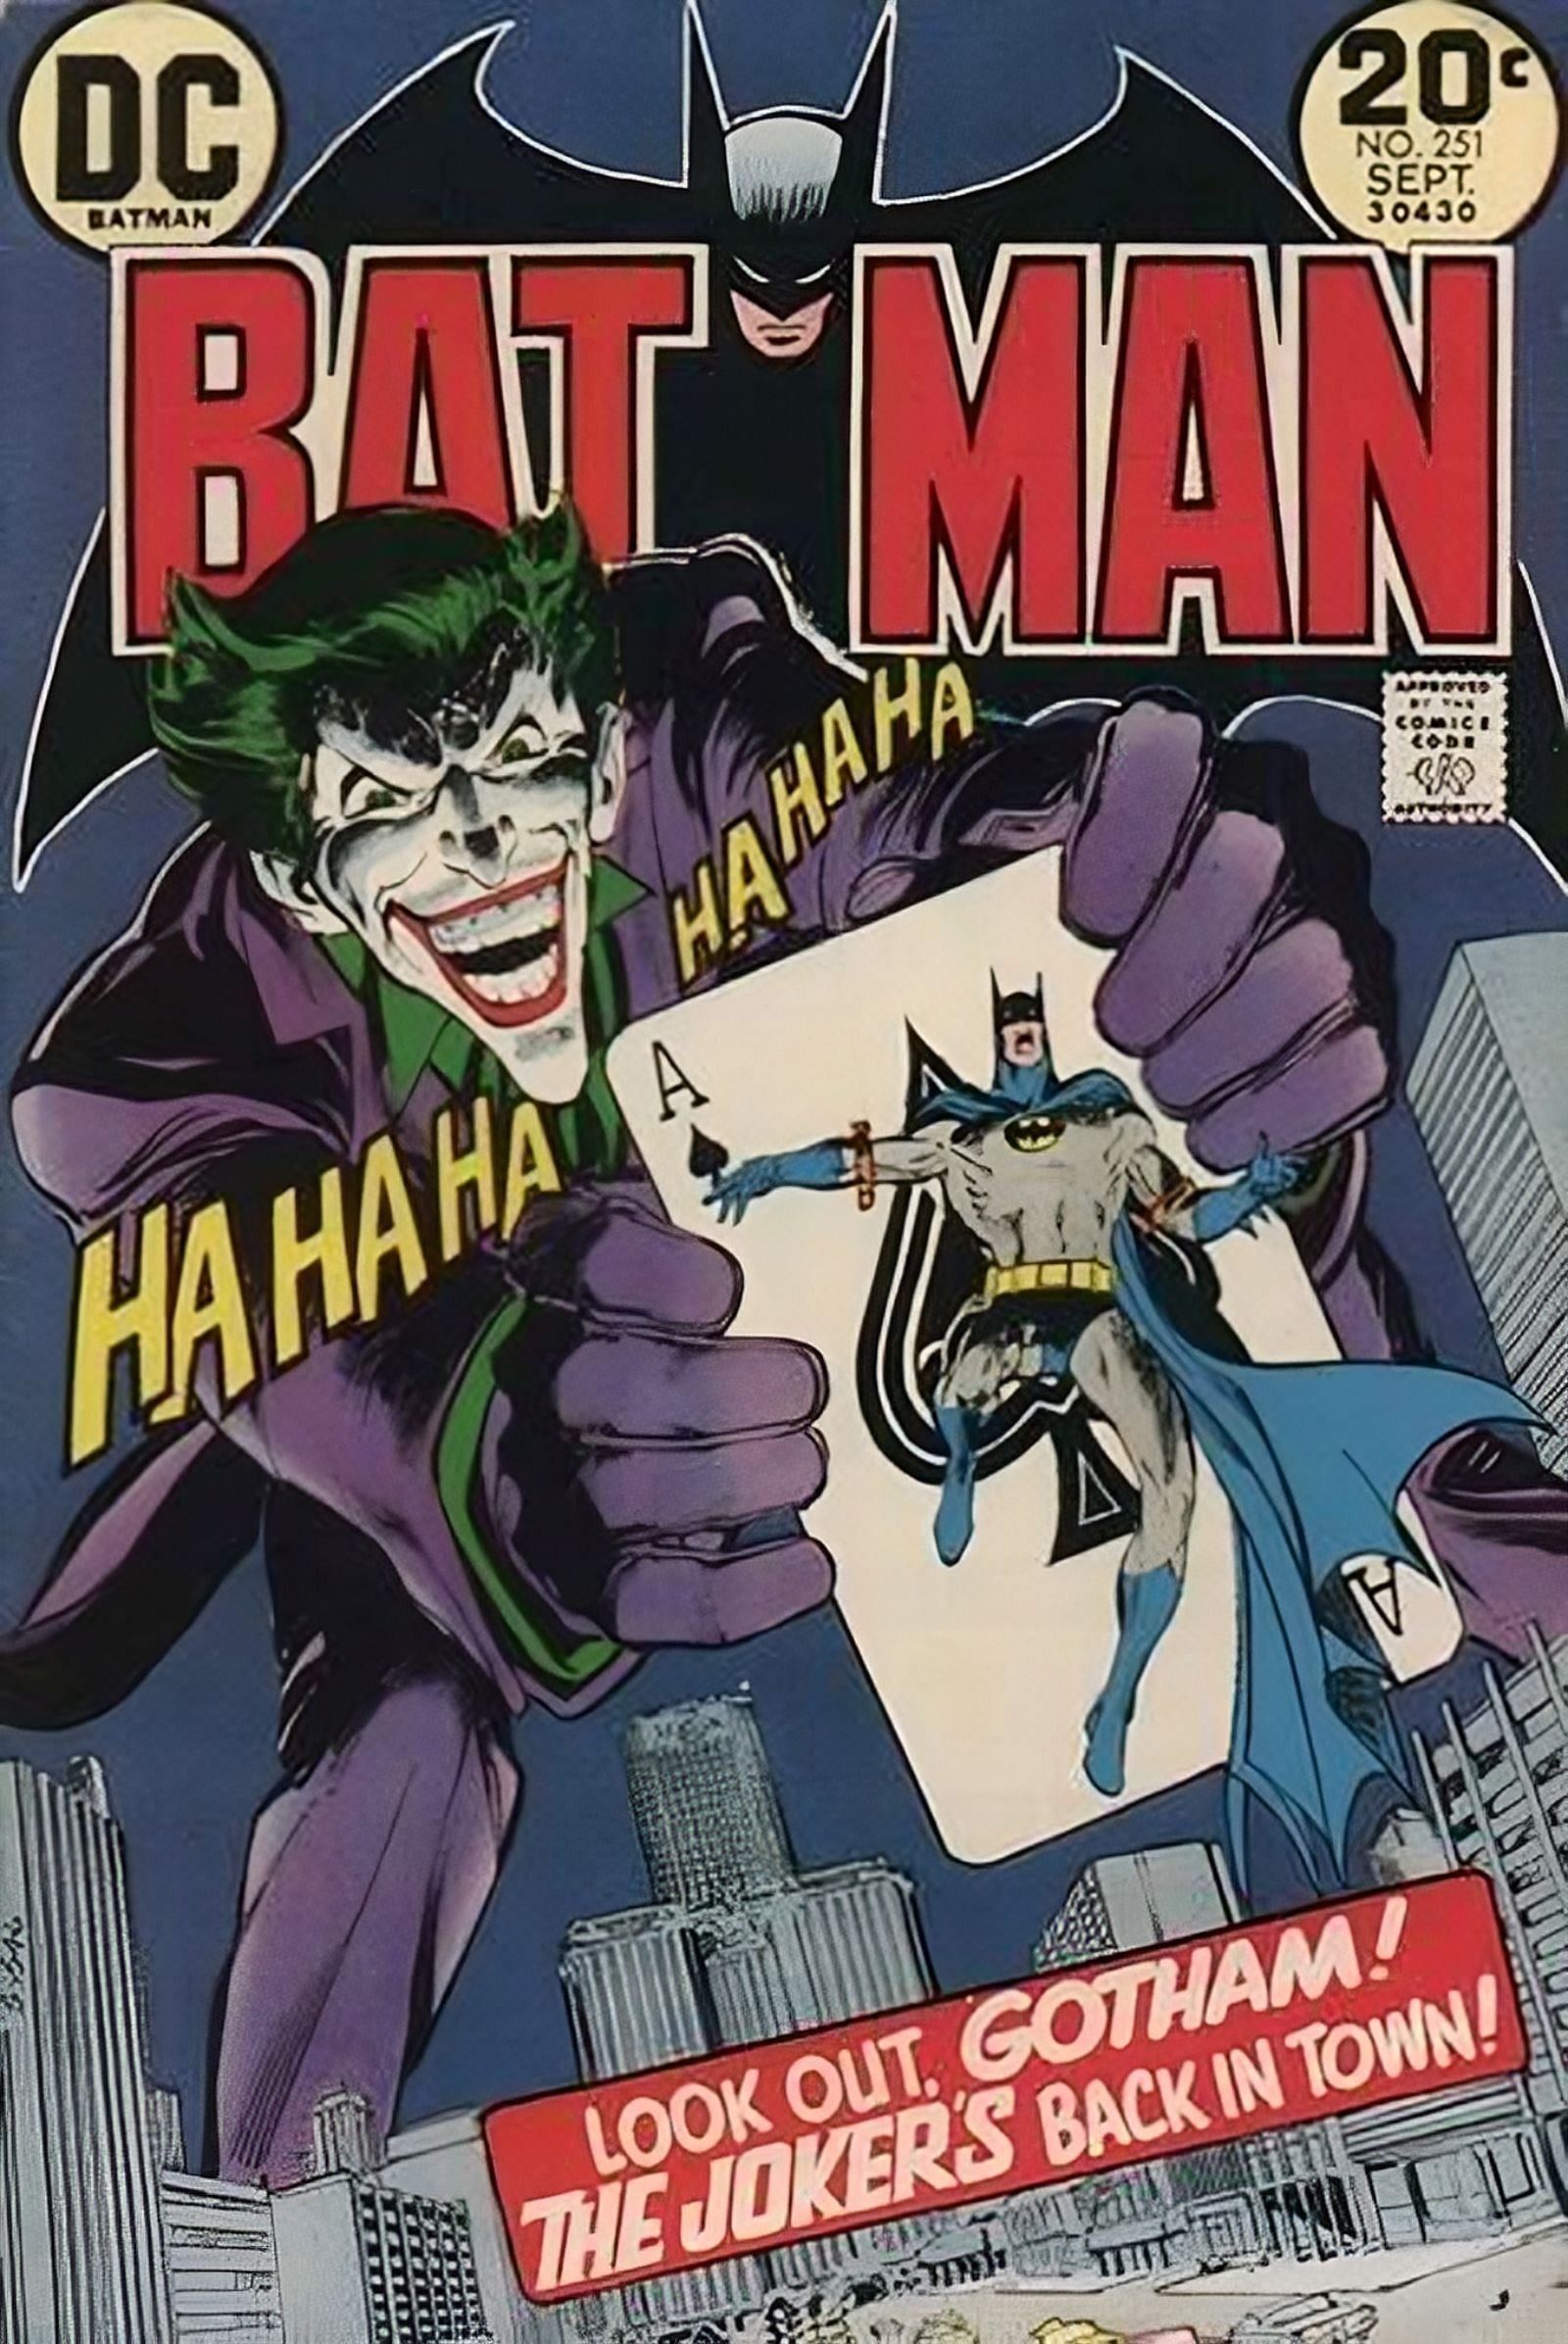 Joker&#039;s revenge (Image via DC Comics)